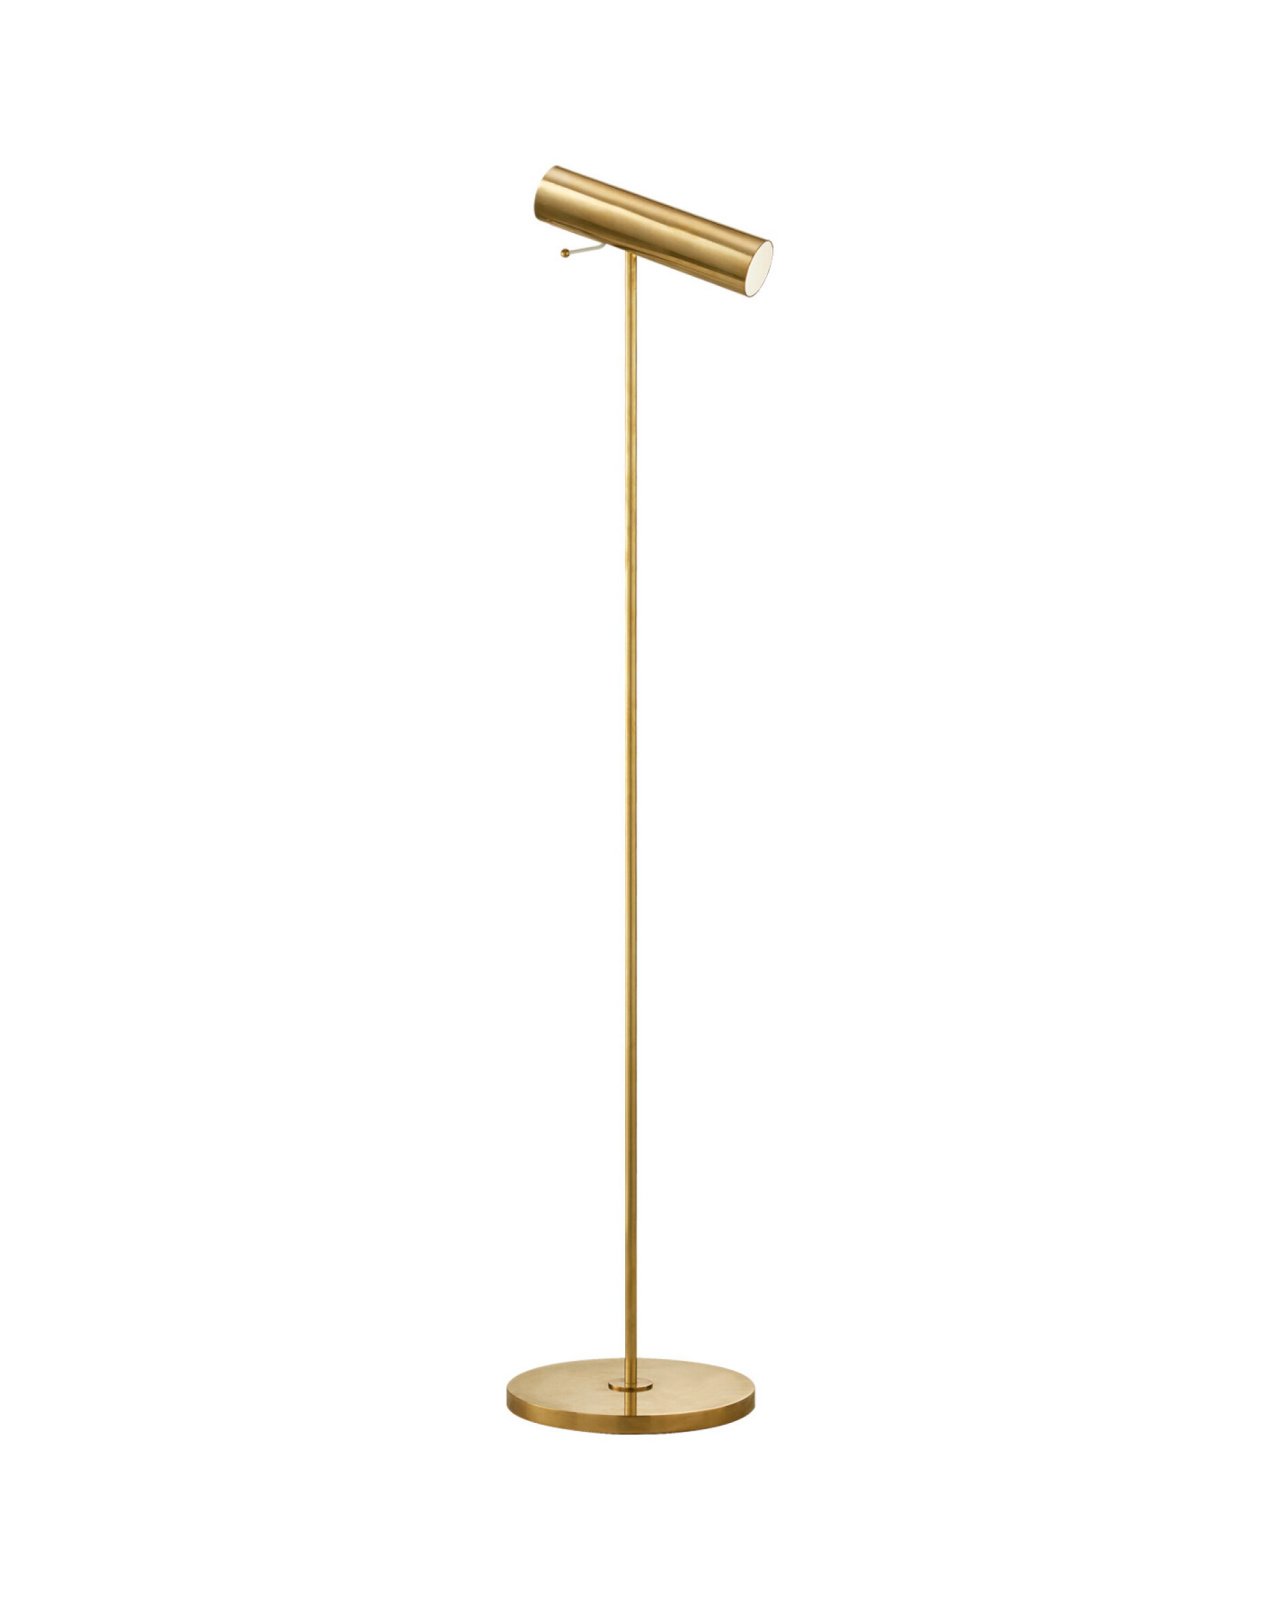 Lancelot Pivoting Floor Lamp Antique Brass